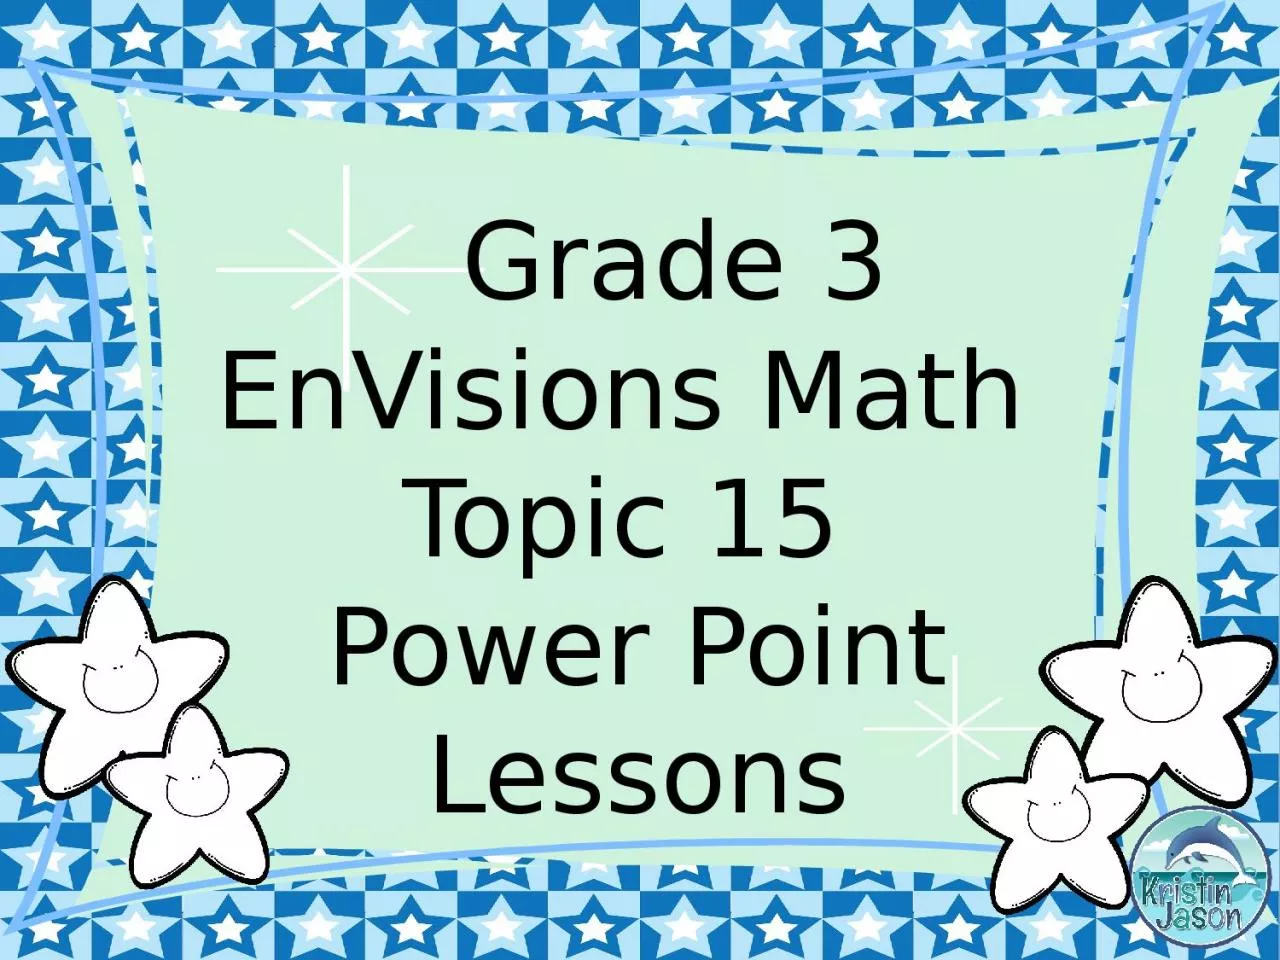 Grade 3  EnVisions  Math